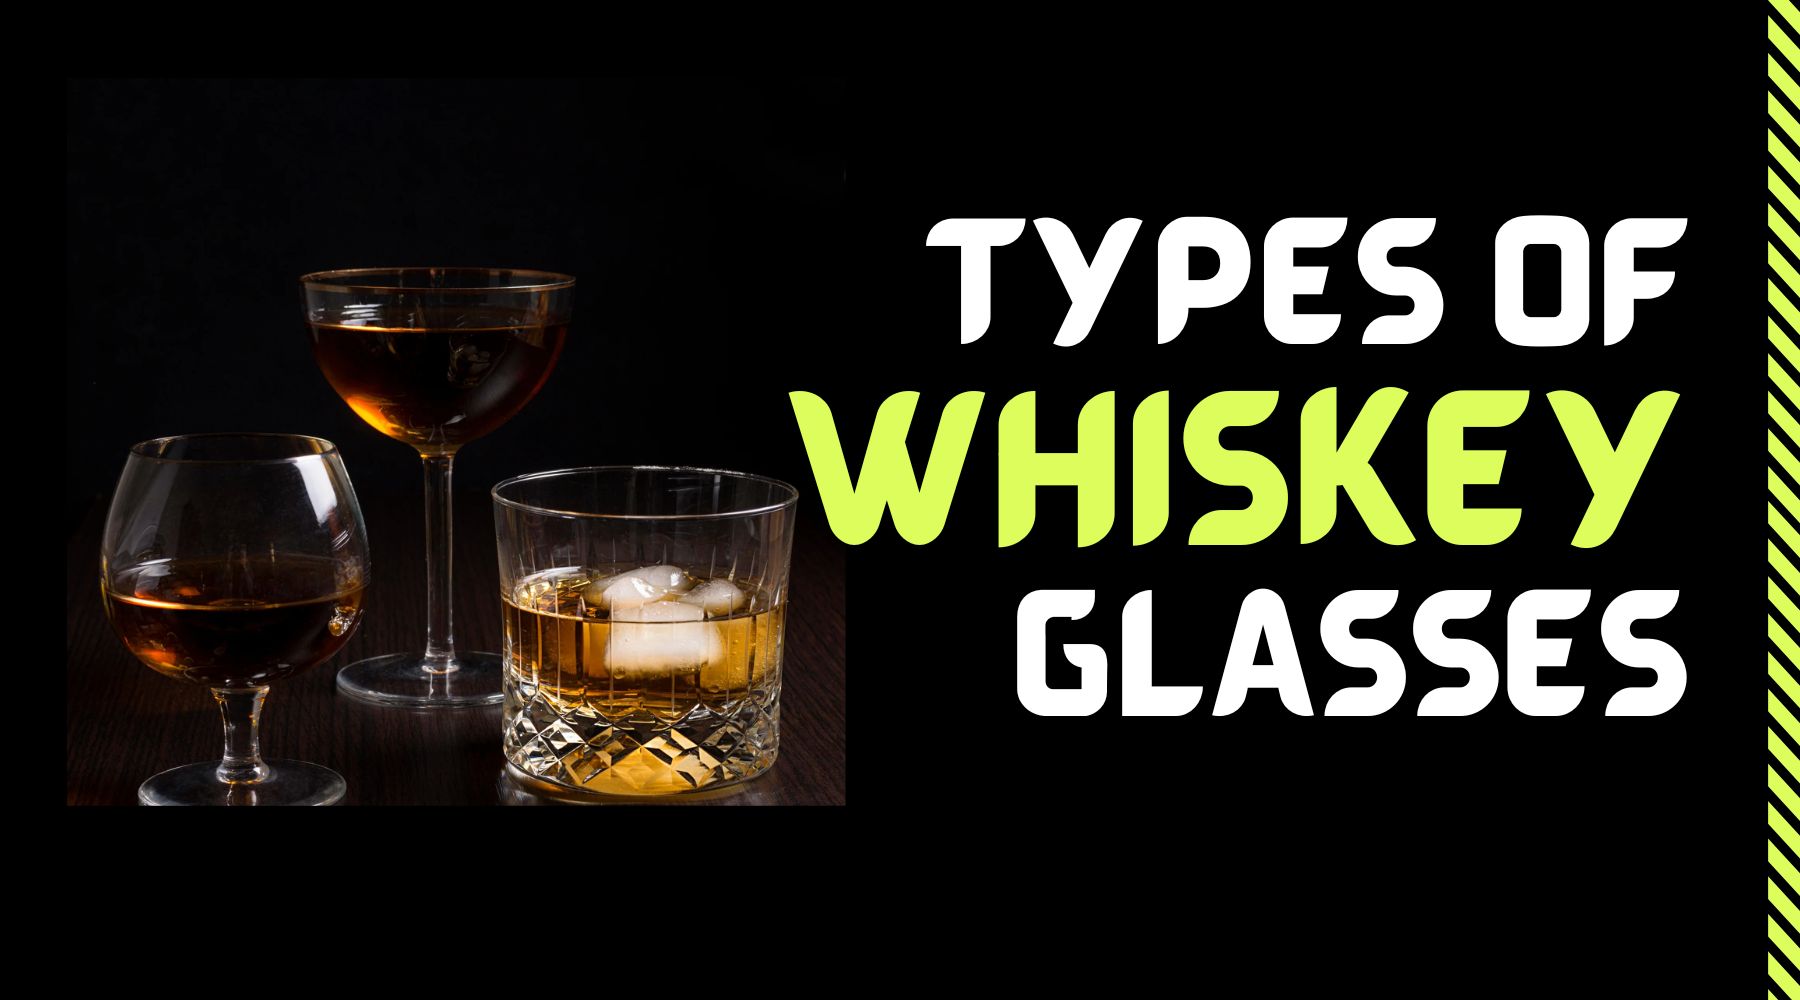 Types of whiskey glasses 